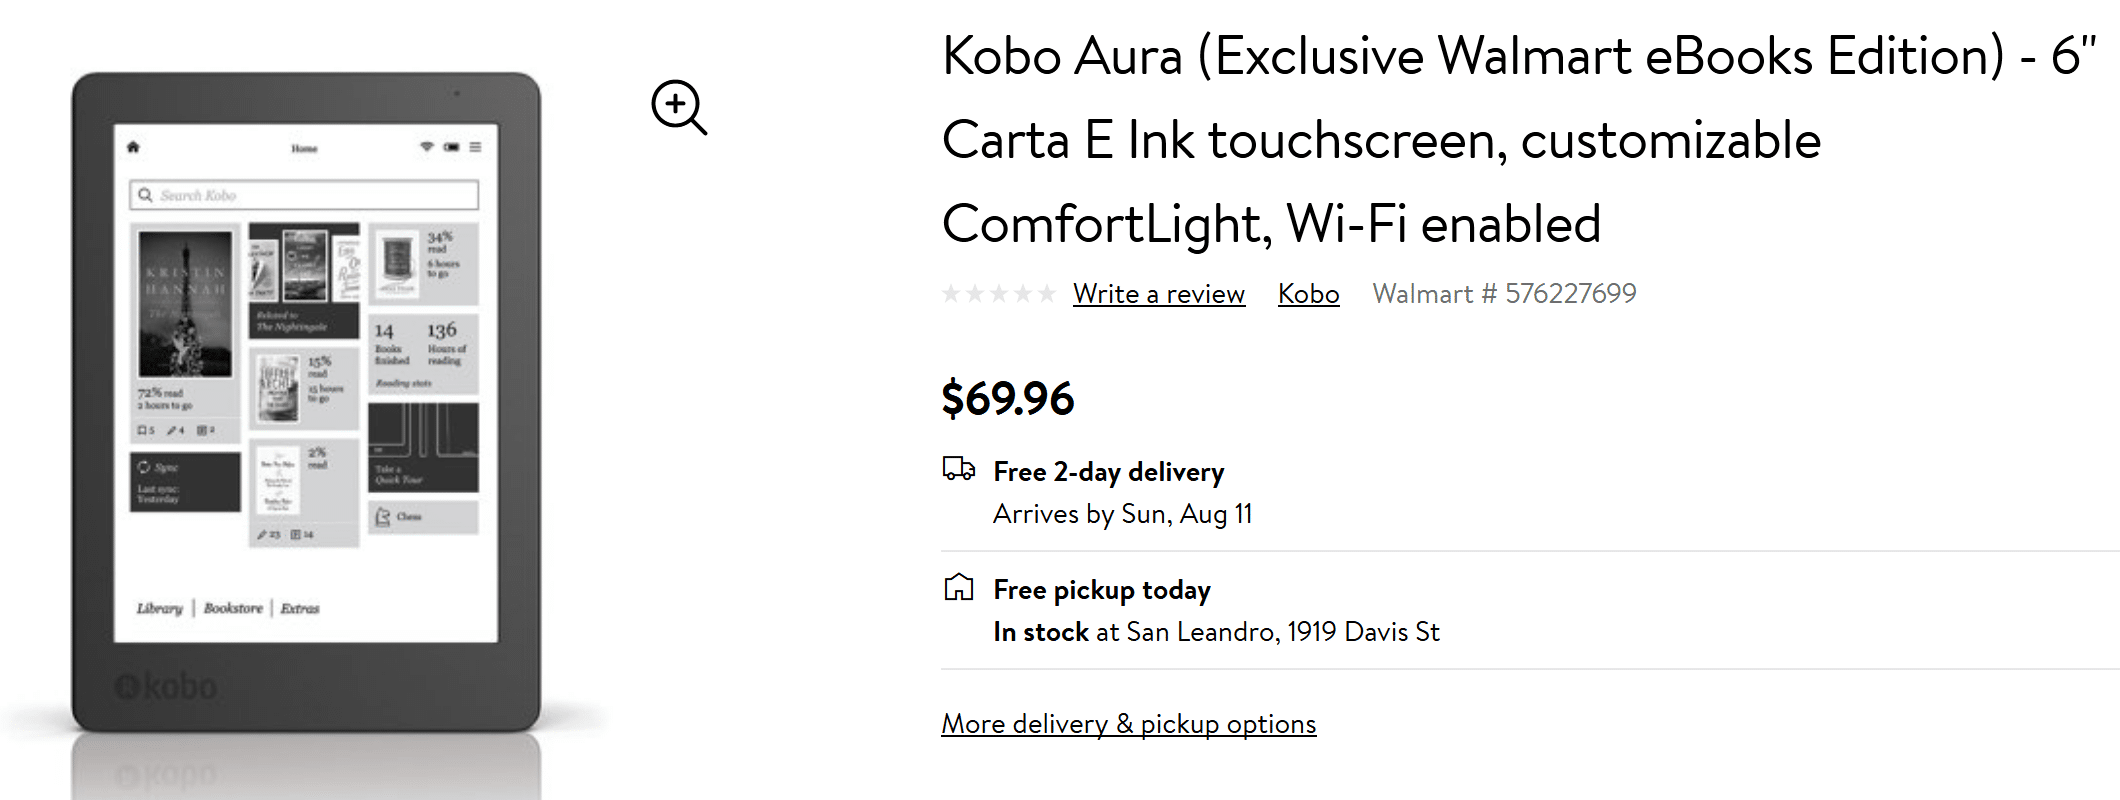 Walmart startet Kobo Aura - Exklusive Walmart eBooks Edition